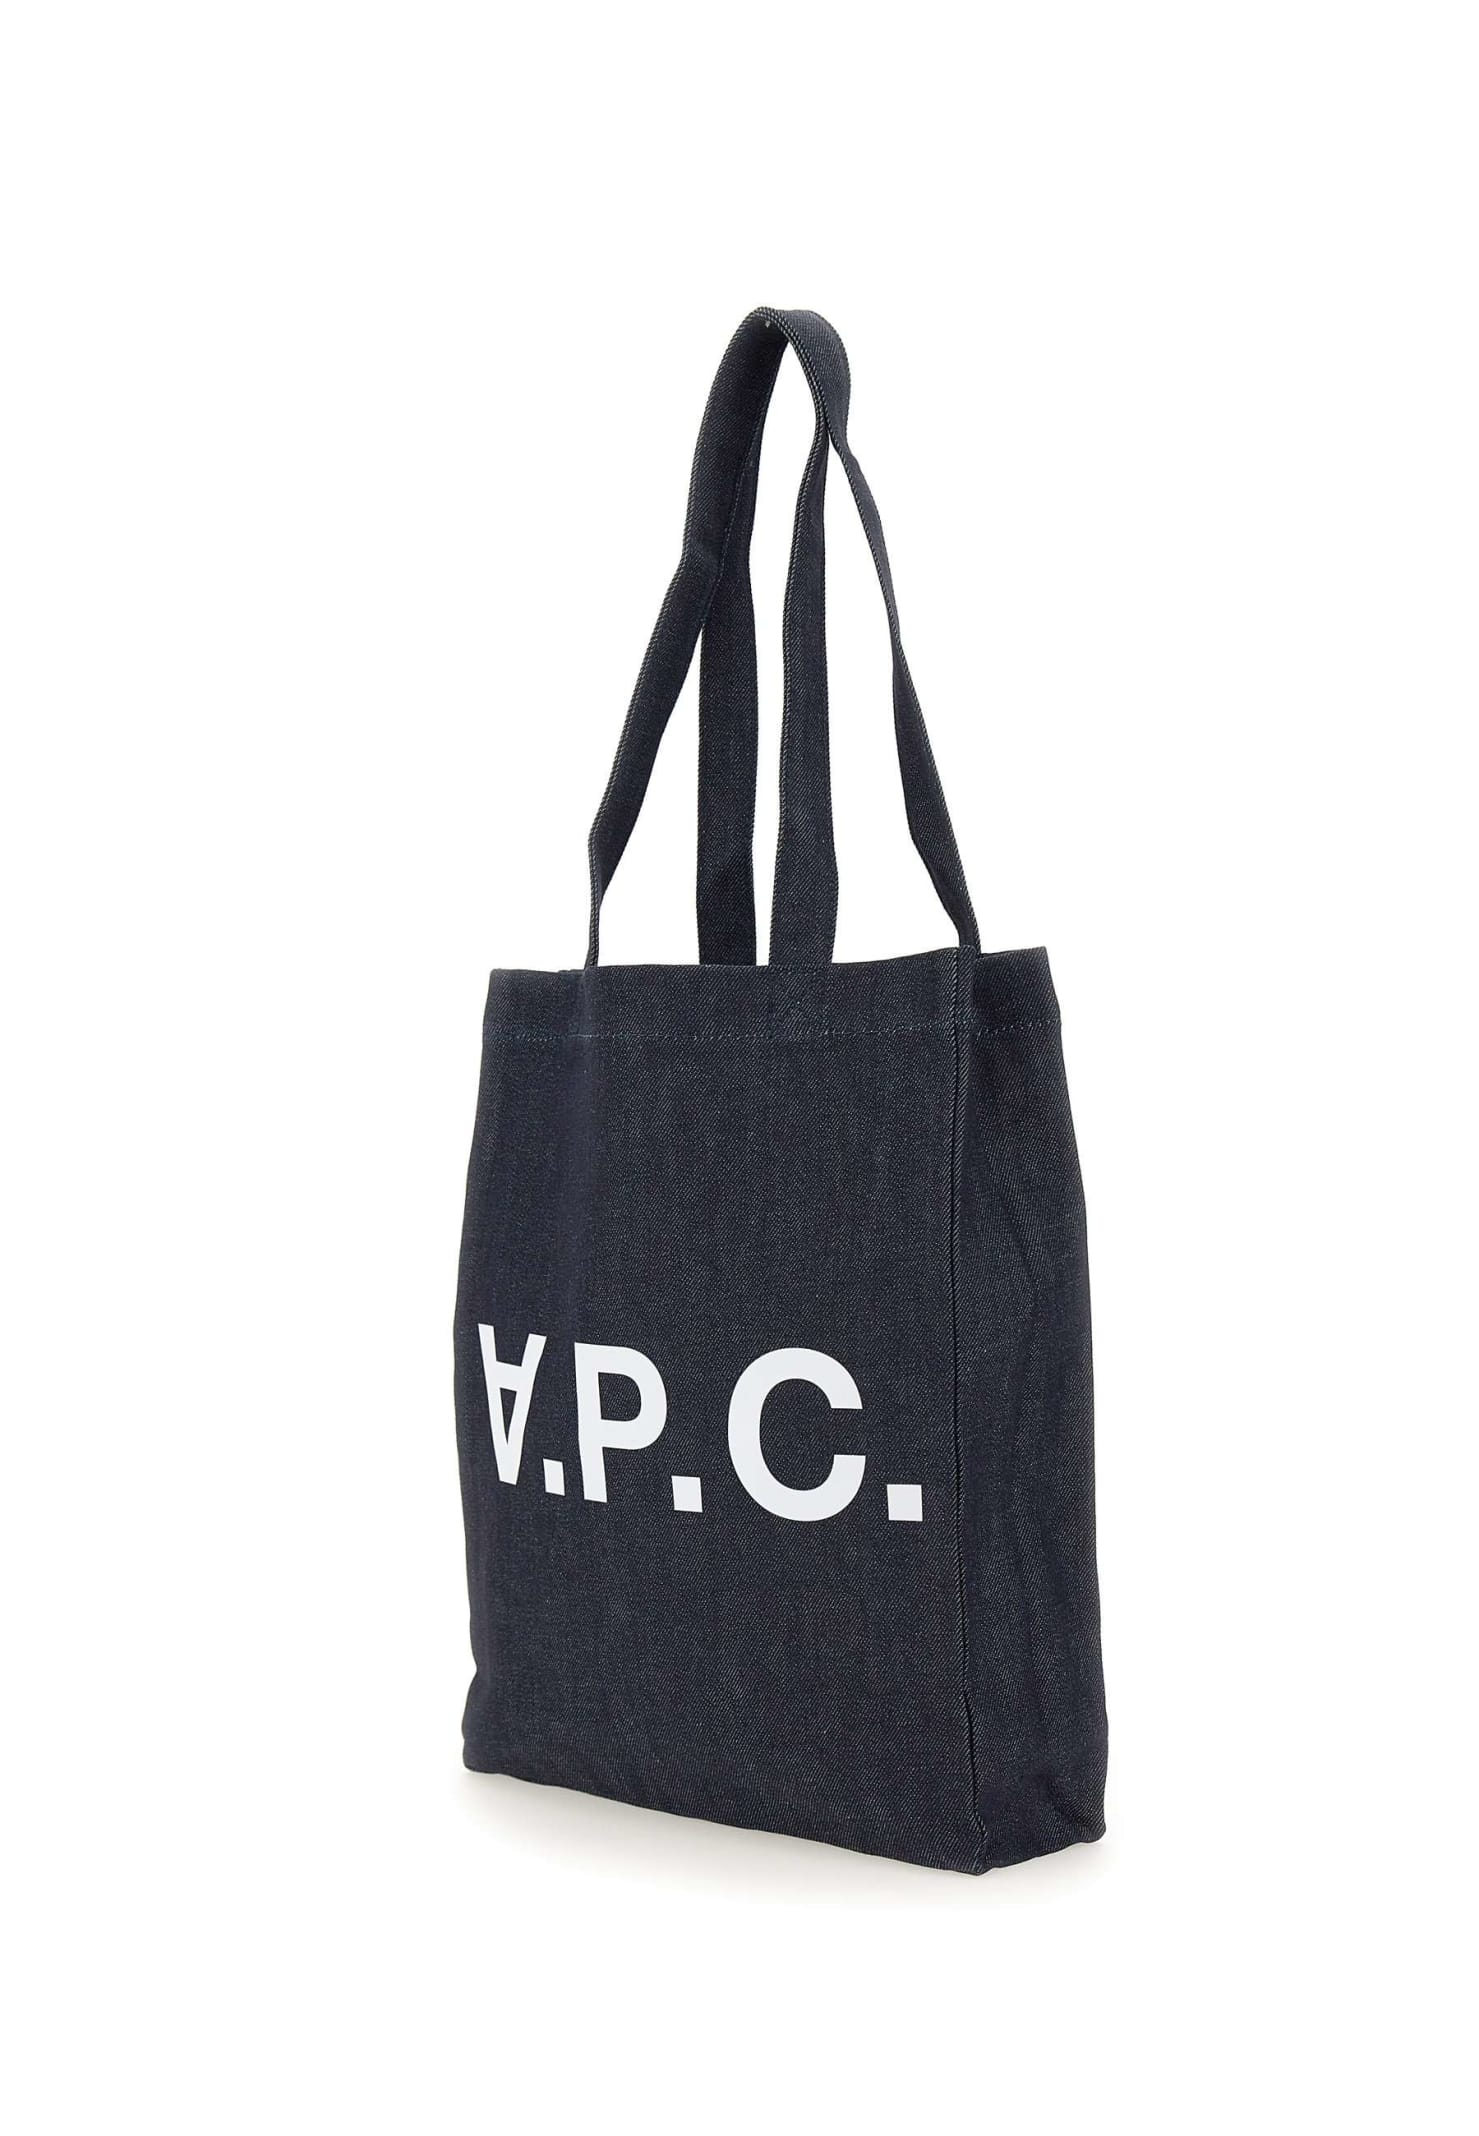 A.P.C. tote Laure Bag